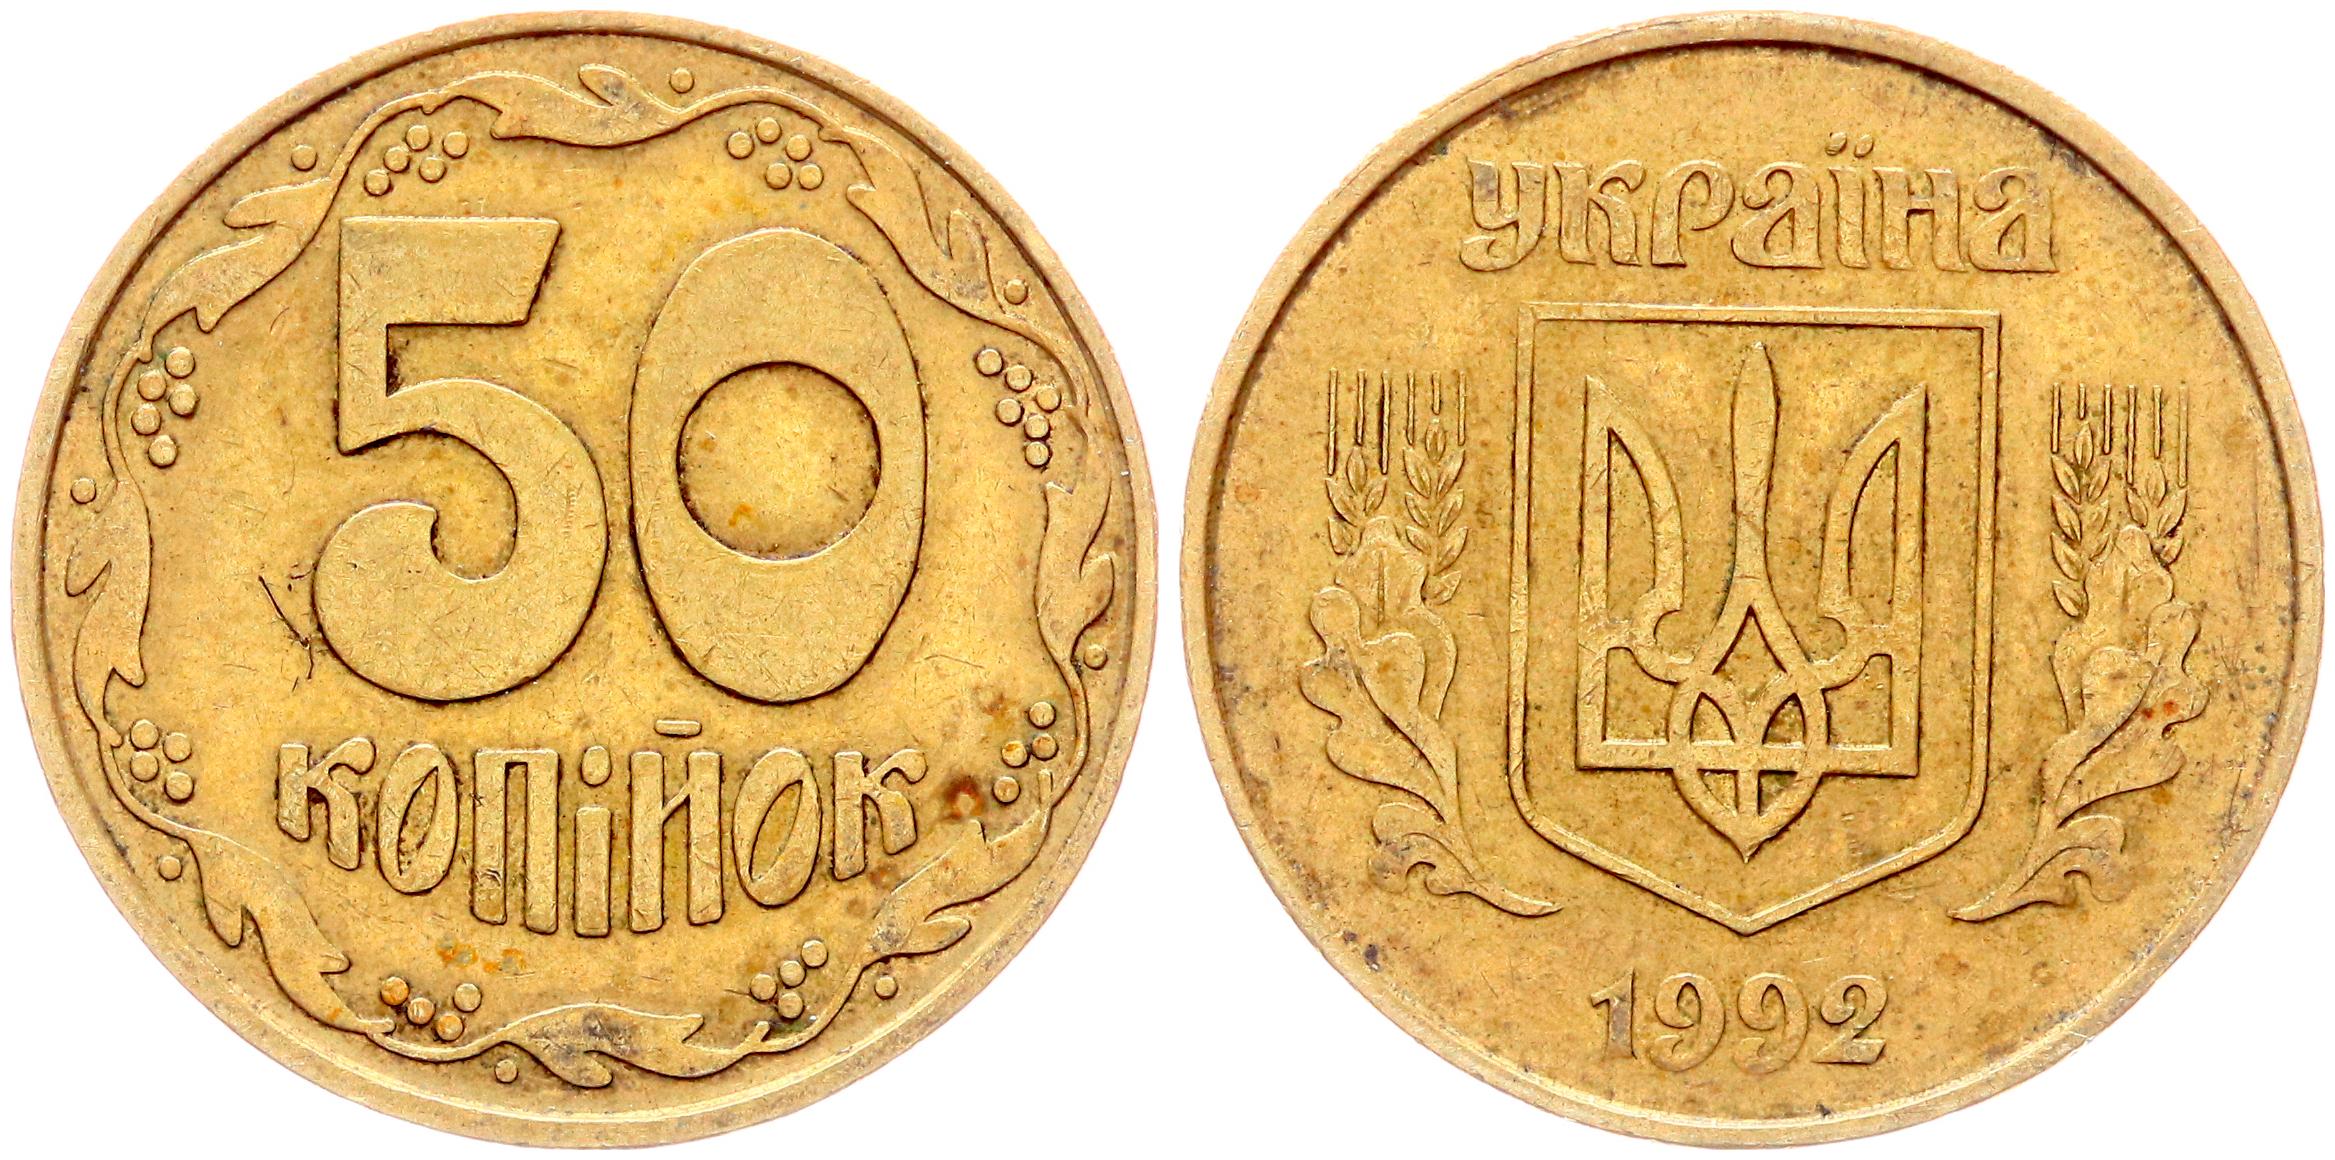 10 копеек 1992. 25 Копеек 1992 Украина. Украина монета 10 копеек 1992. Монета 25 копеек 1992 Украина. 25 Копеек 1992.